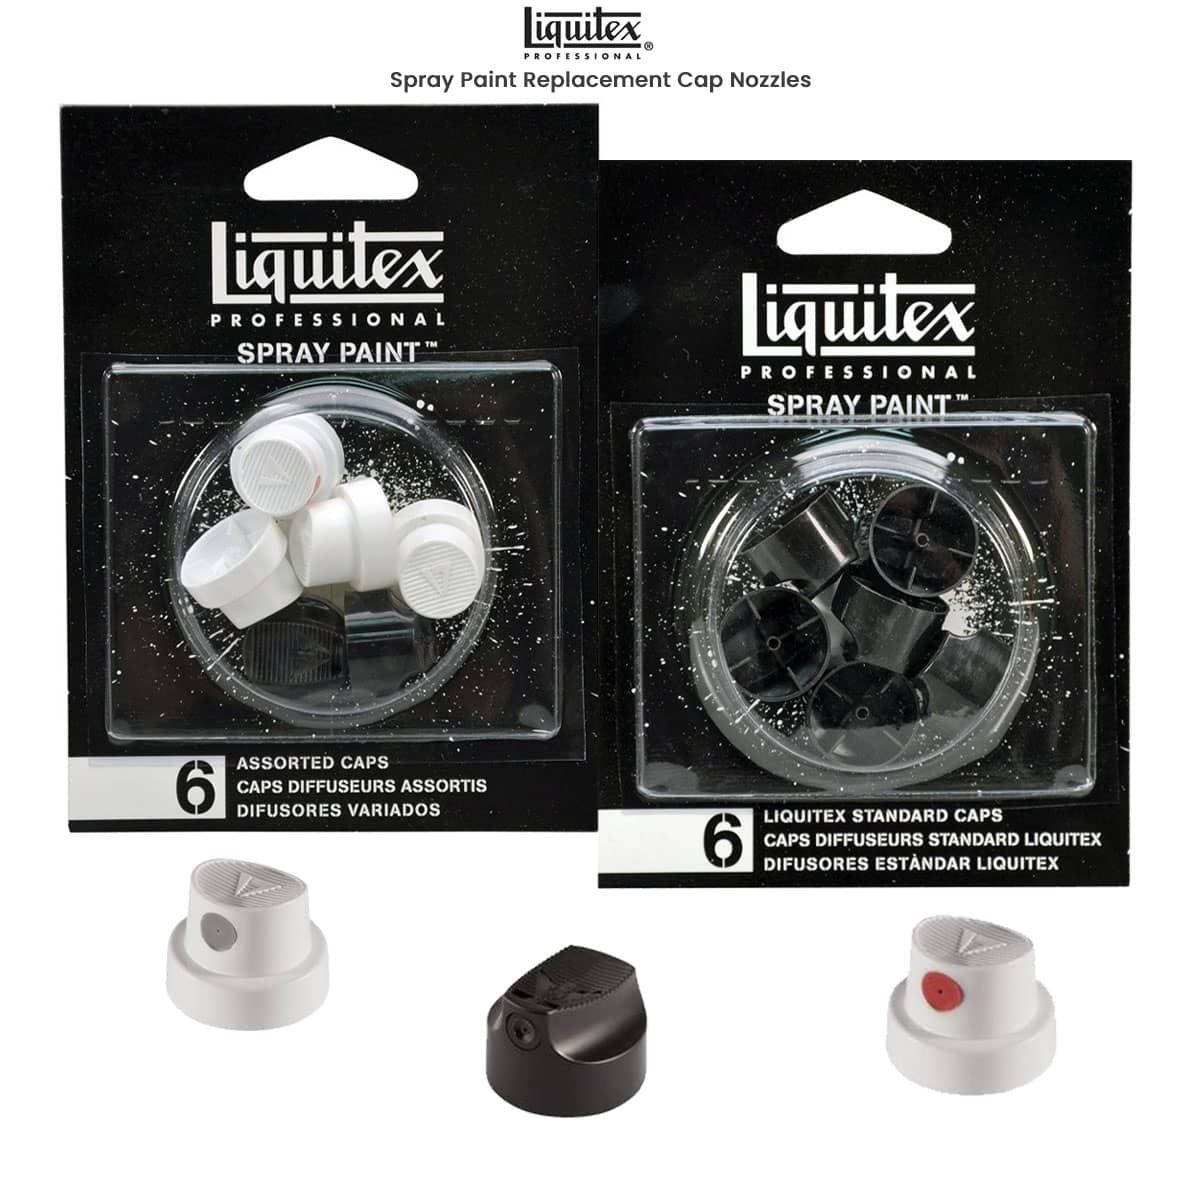 Liquitex Sprays Caps & Nozzle Replacements